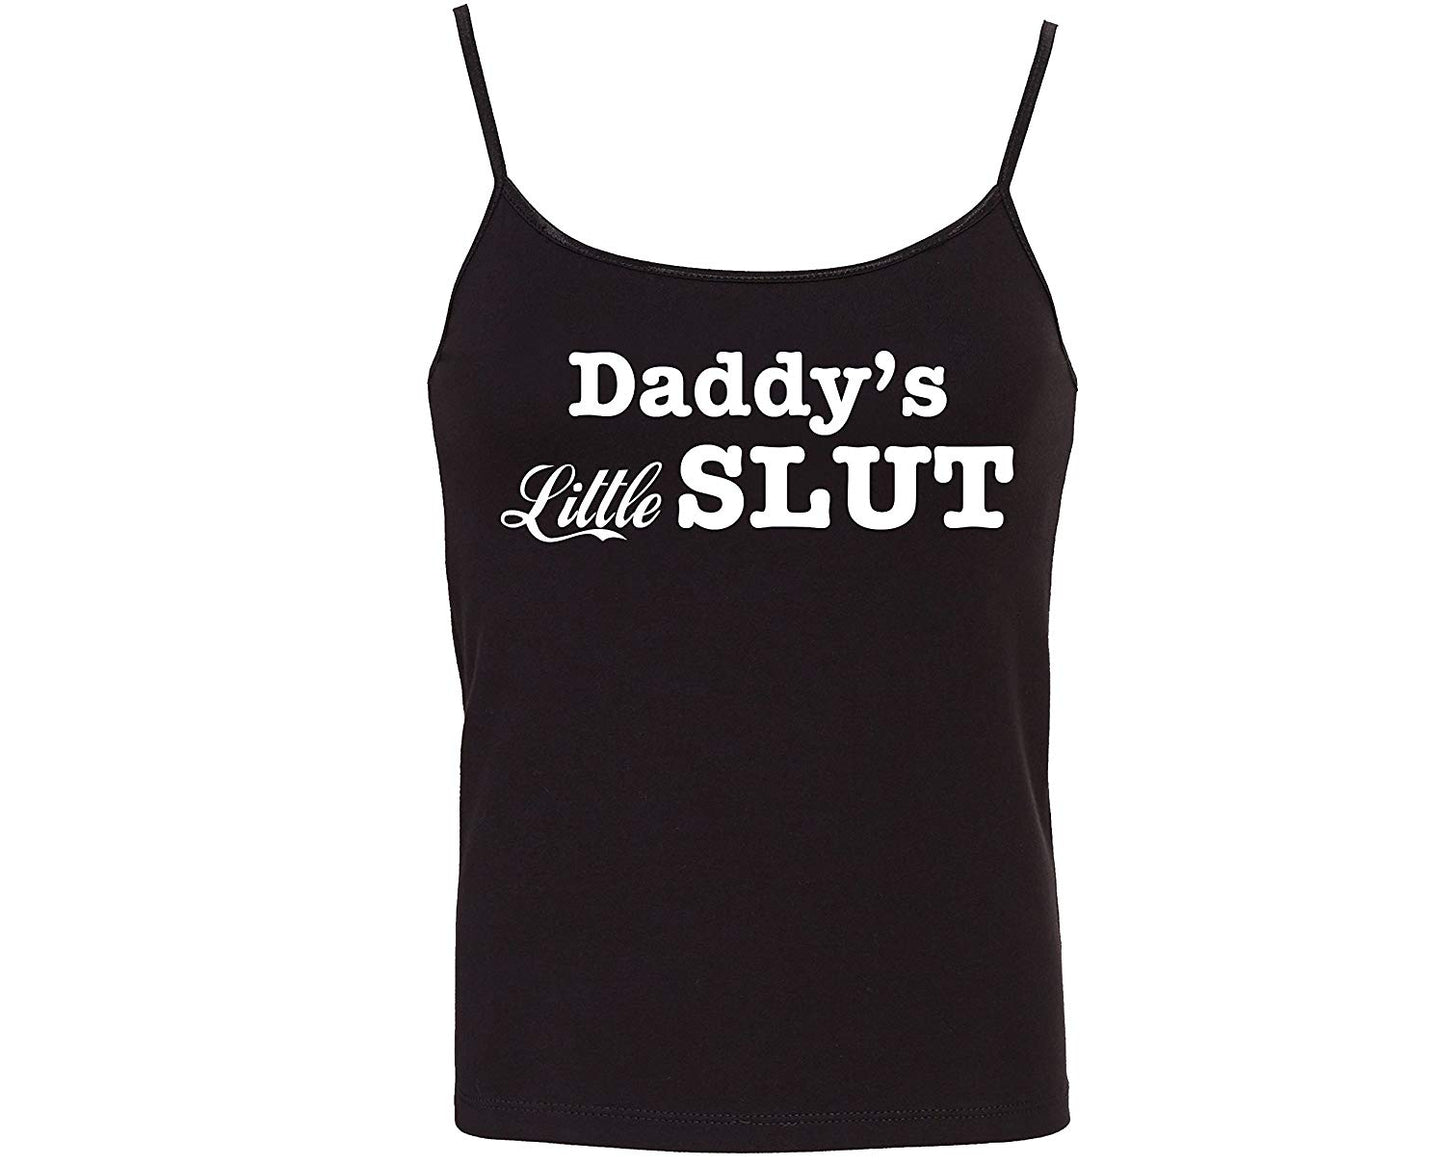 Knaughty Knickers Daddy's Little Slut Fun Flirty Camisole Cami Tank Top Sleep Wear Fitted Scoop Neck